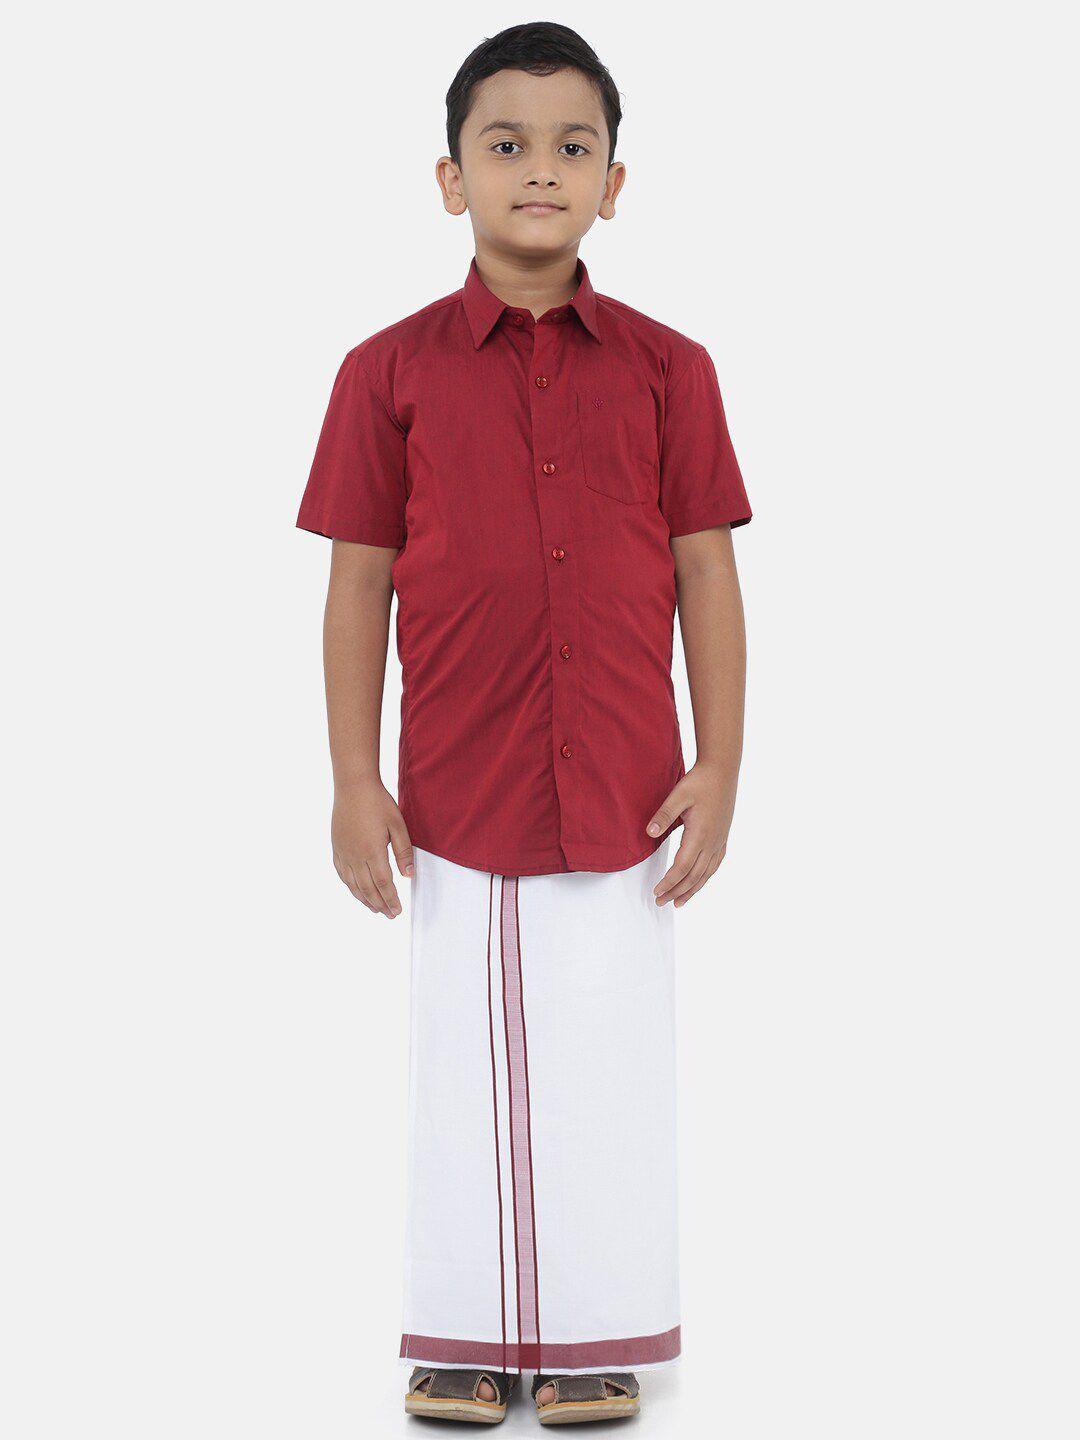 littlestars boys maroon & white shirt with dhoti pants